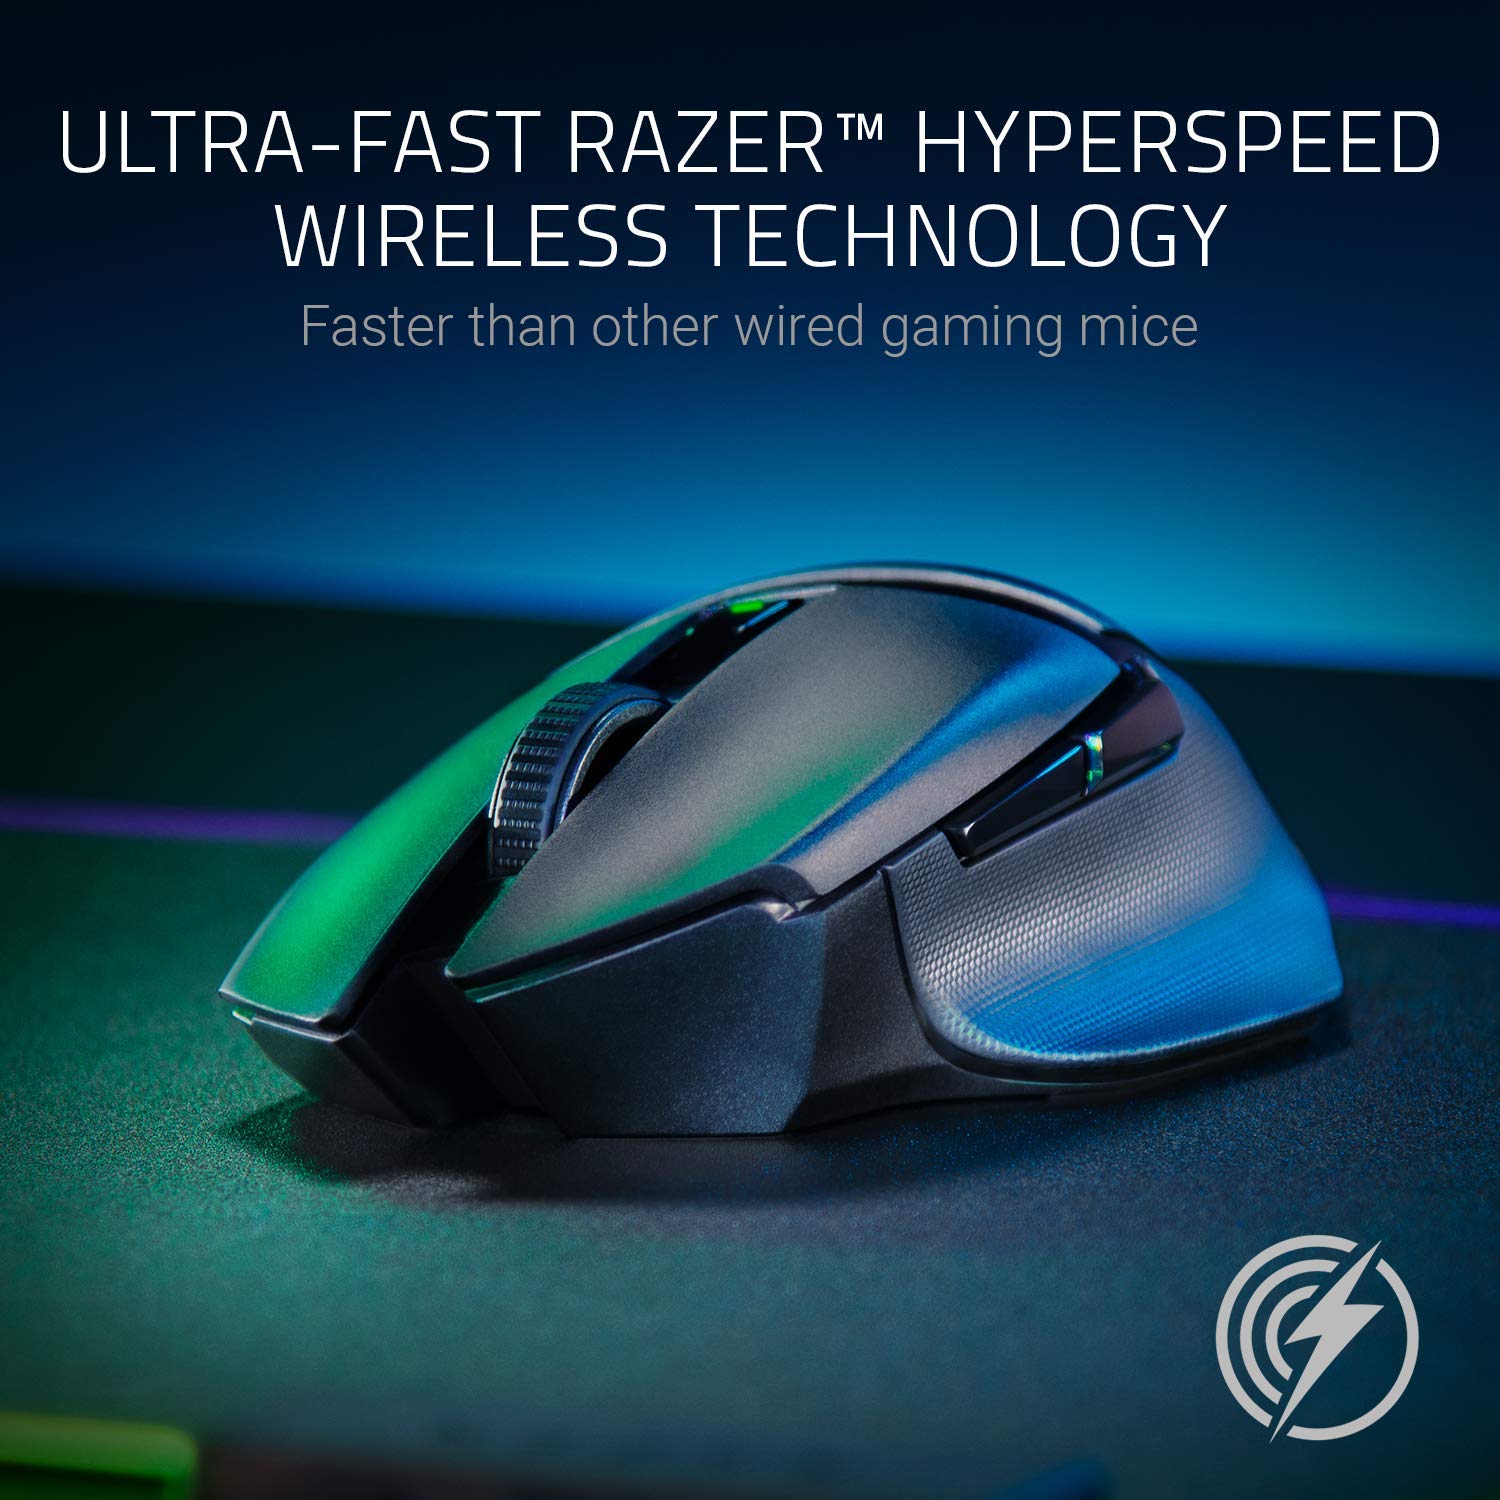 Razer Basilisk X HyperSpeed Gaming Mouse ของแท้ ประกันศูนย์ 2ปี